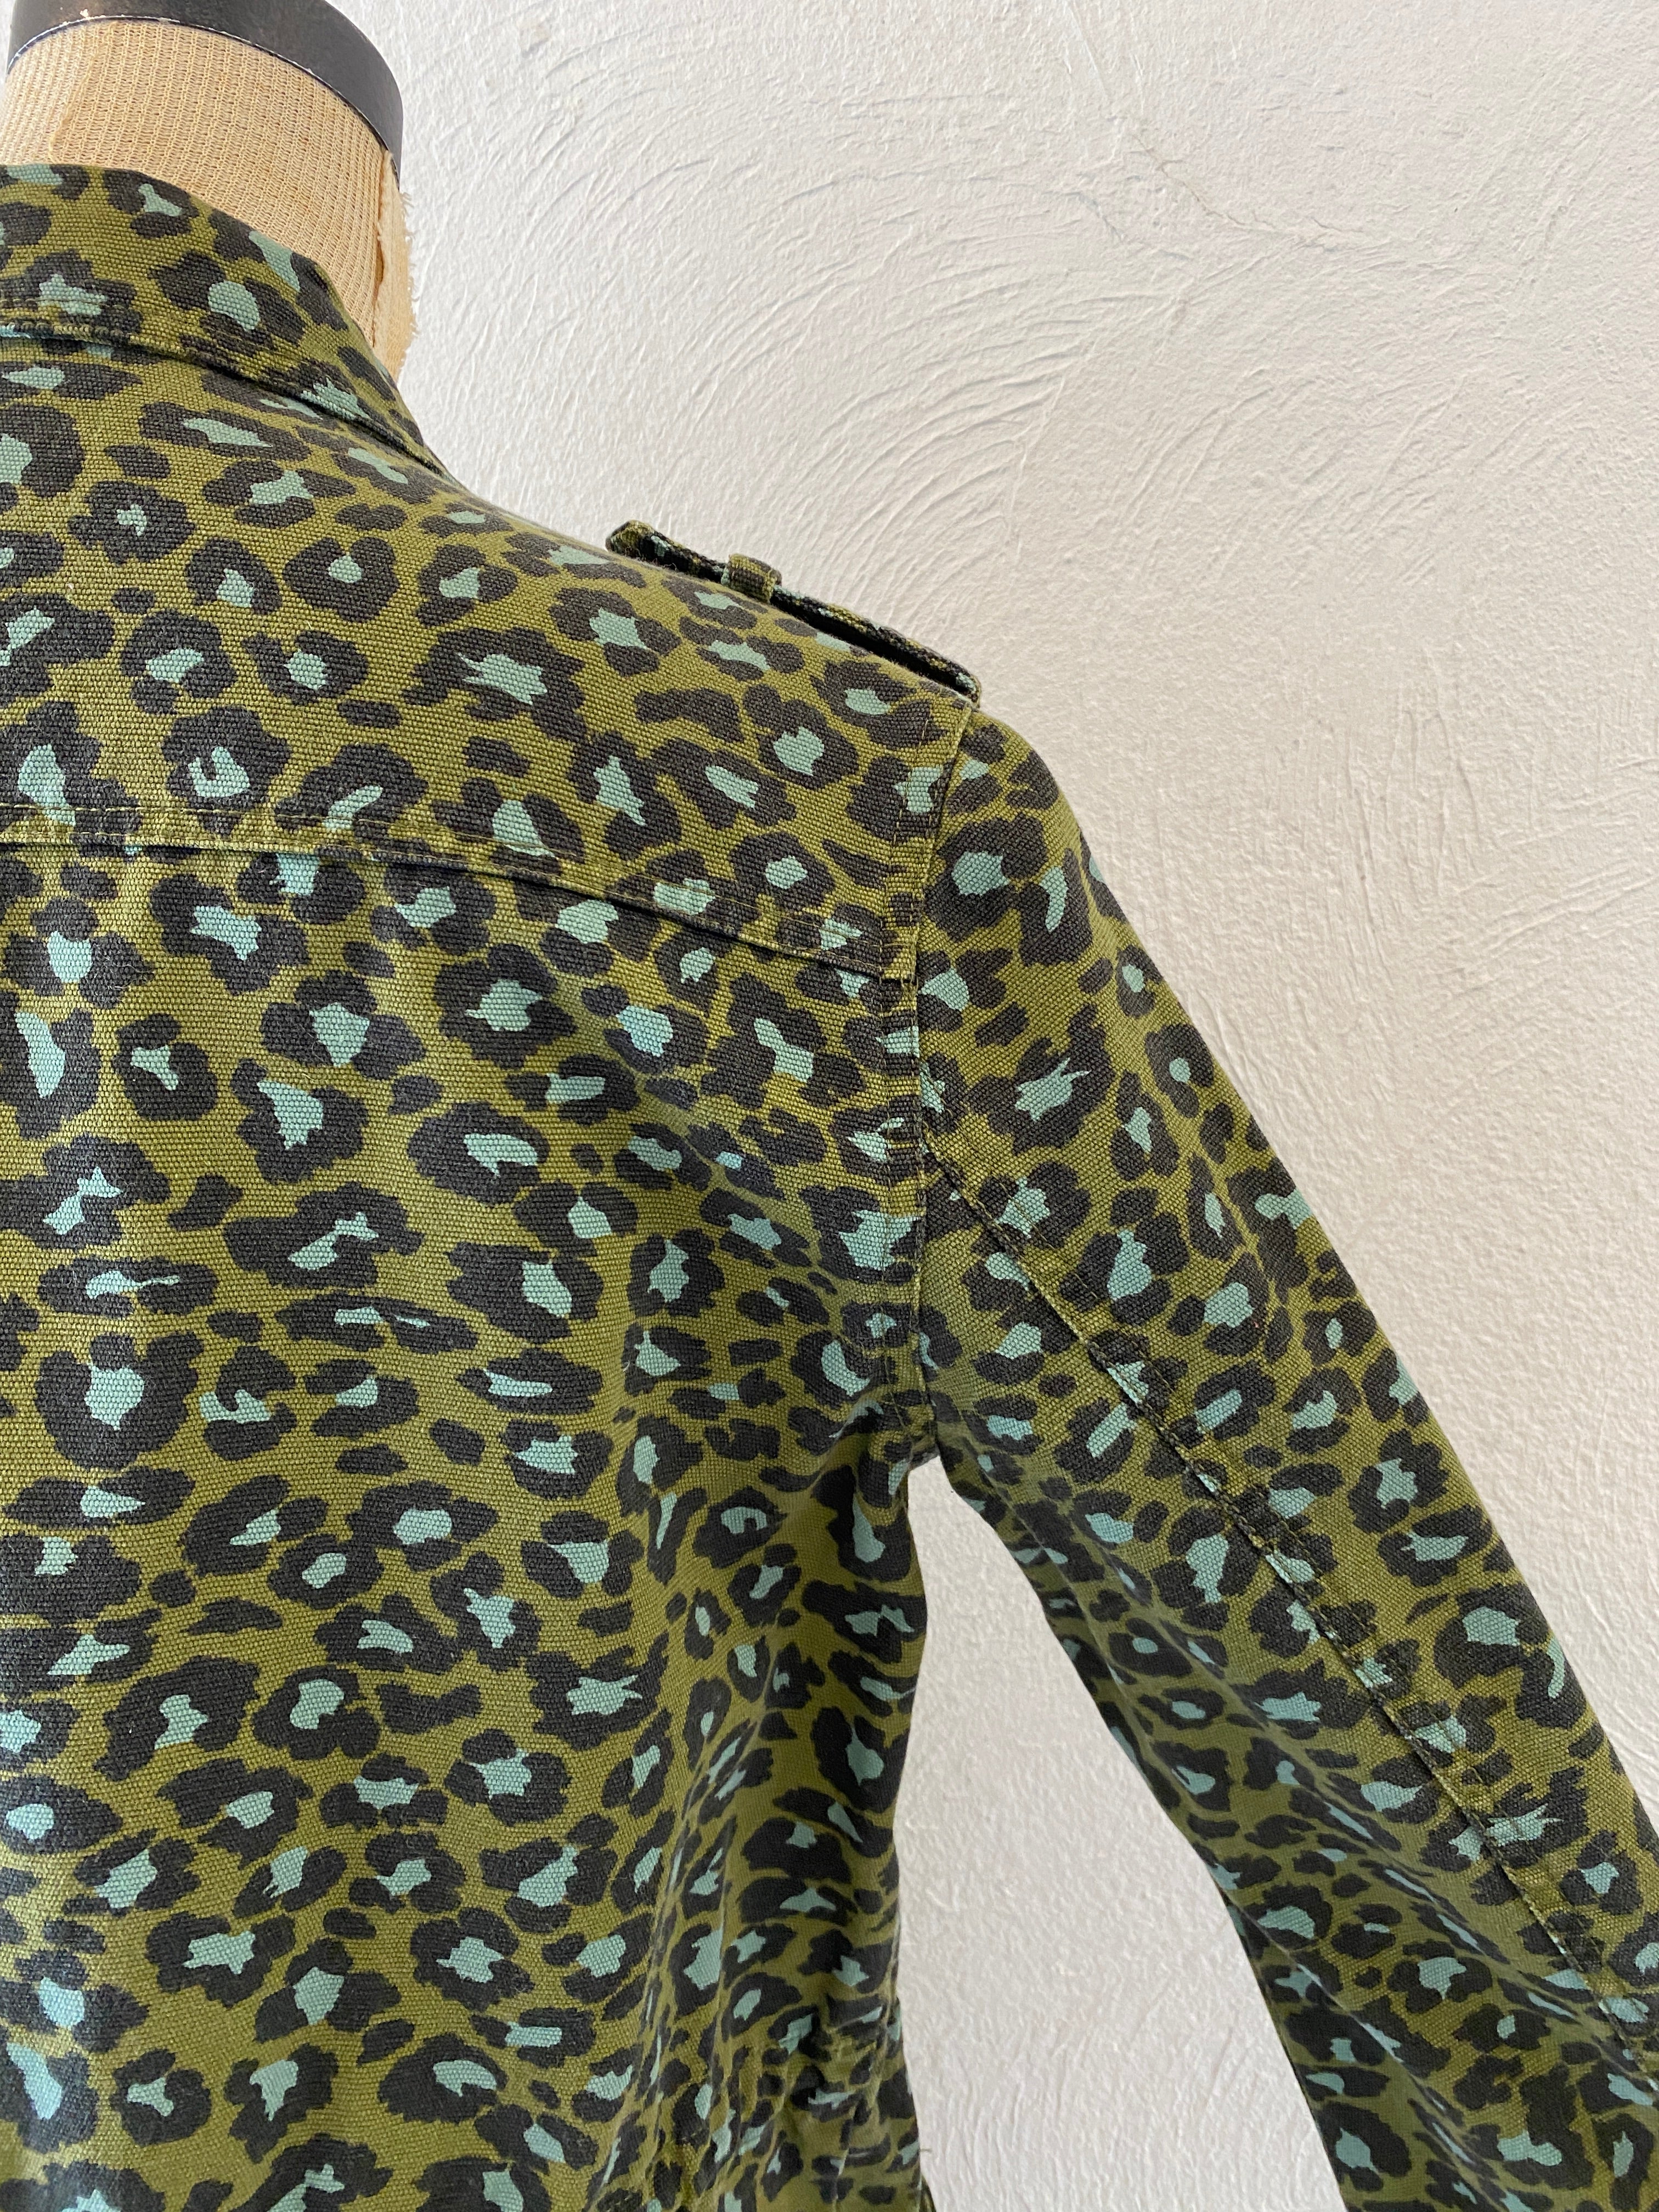 leopard safari jacket